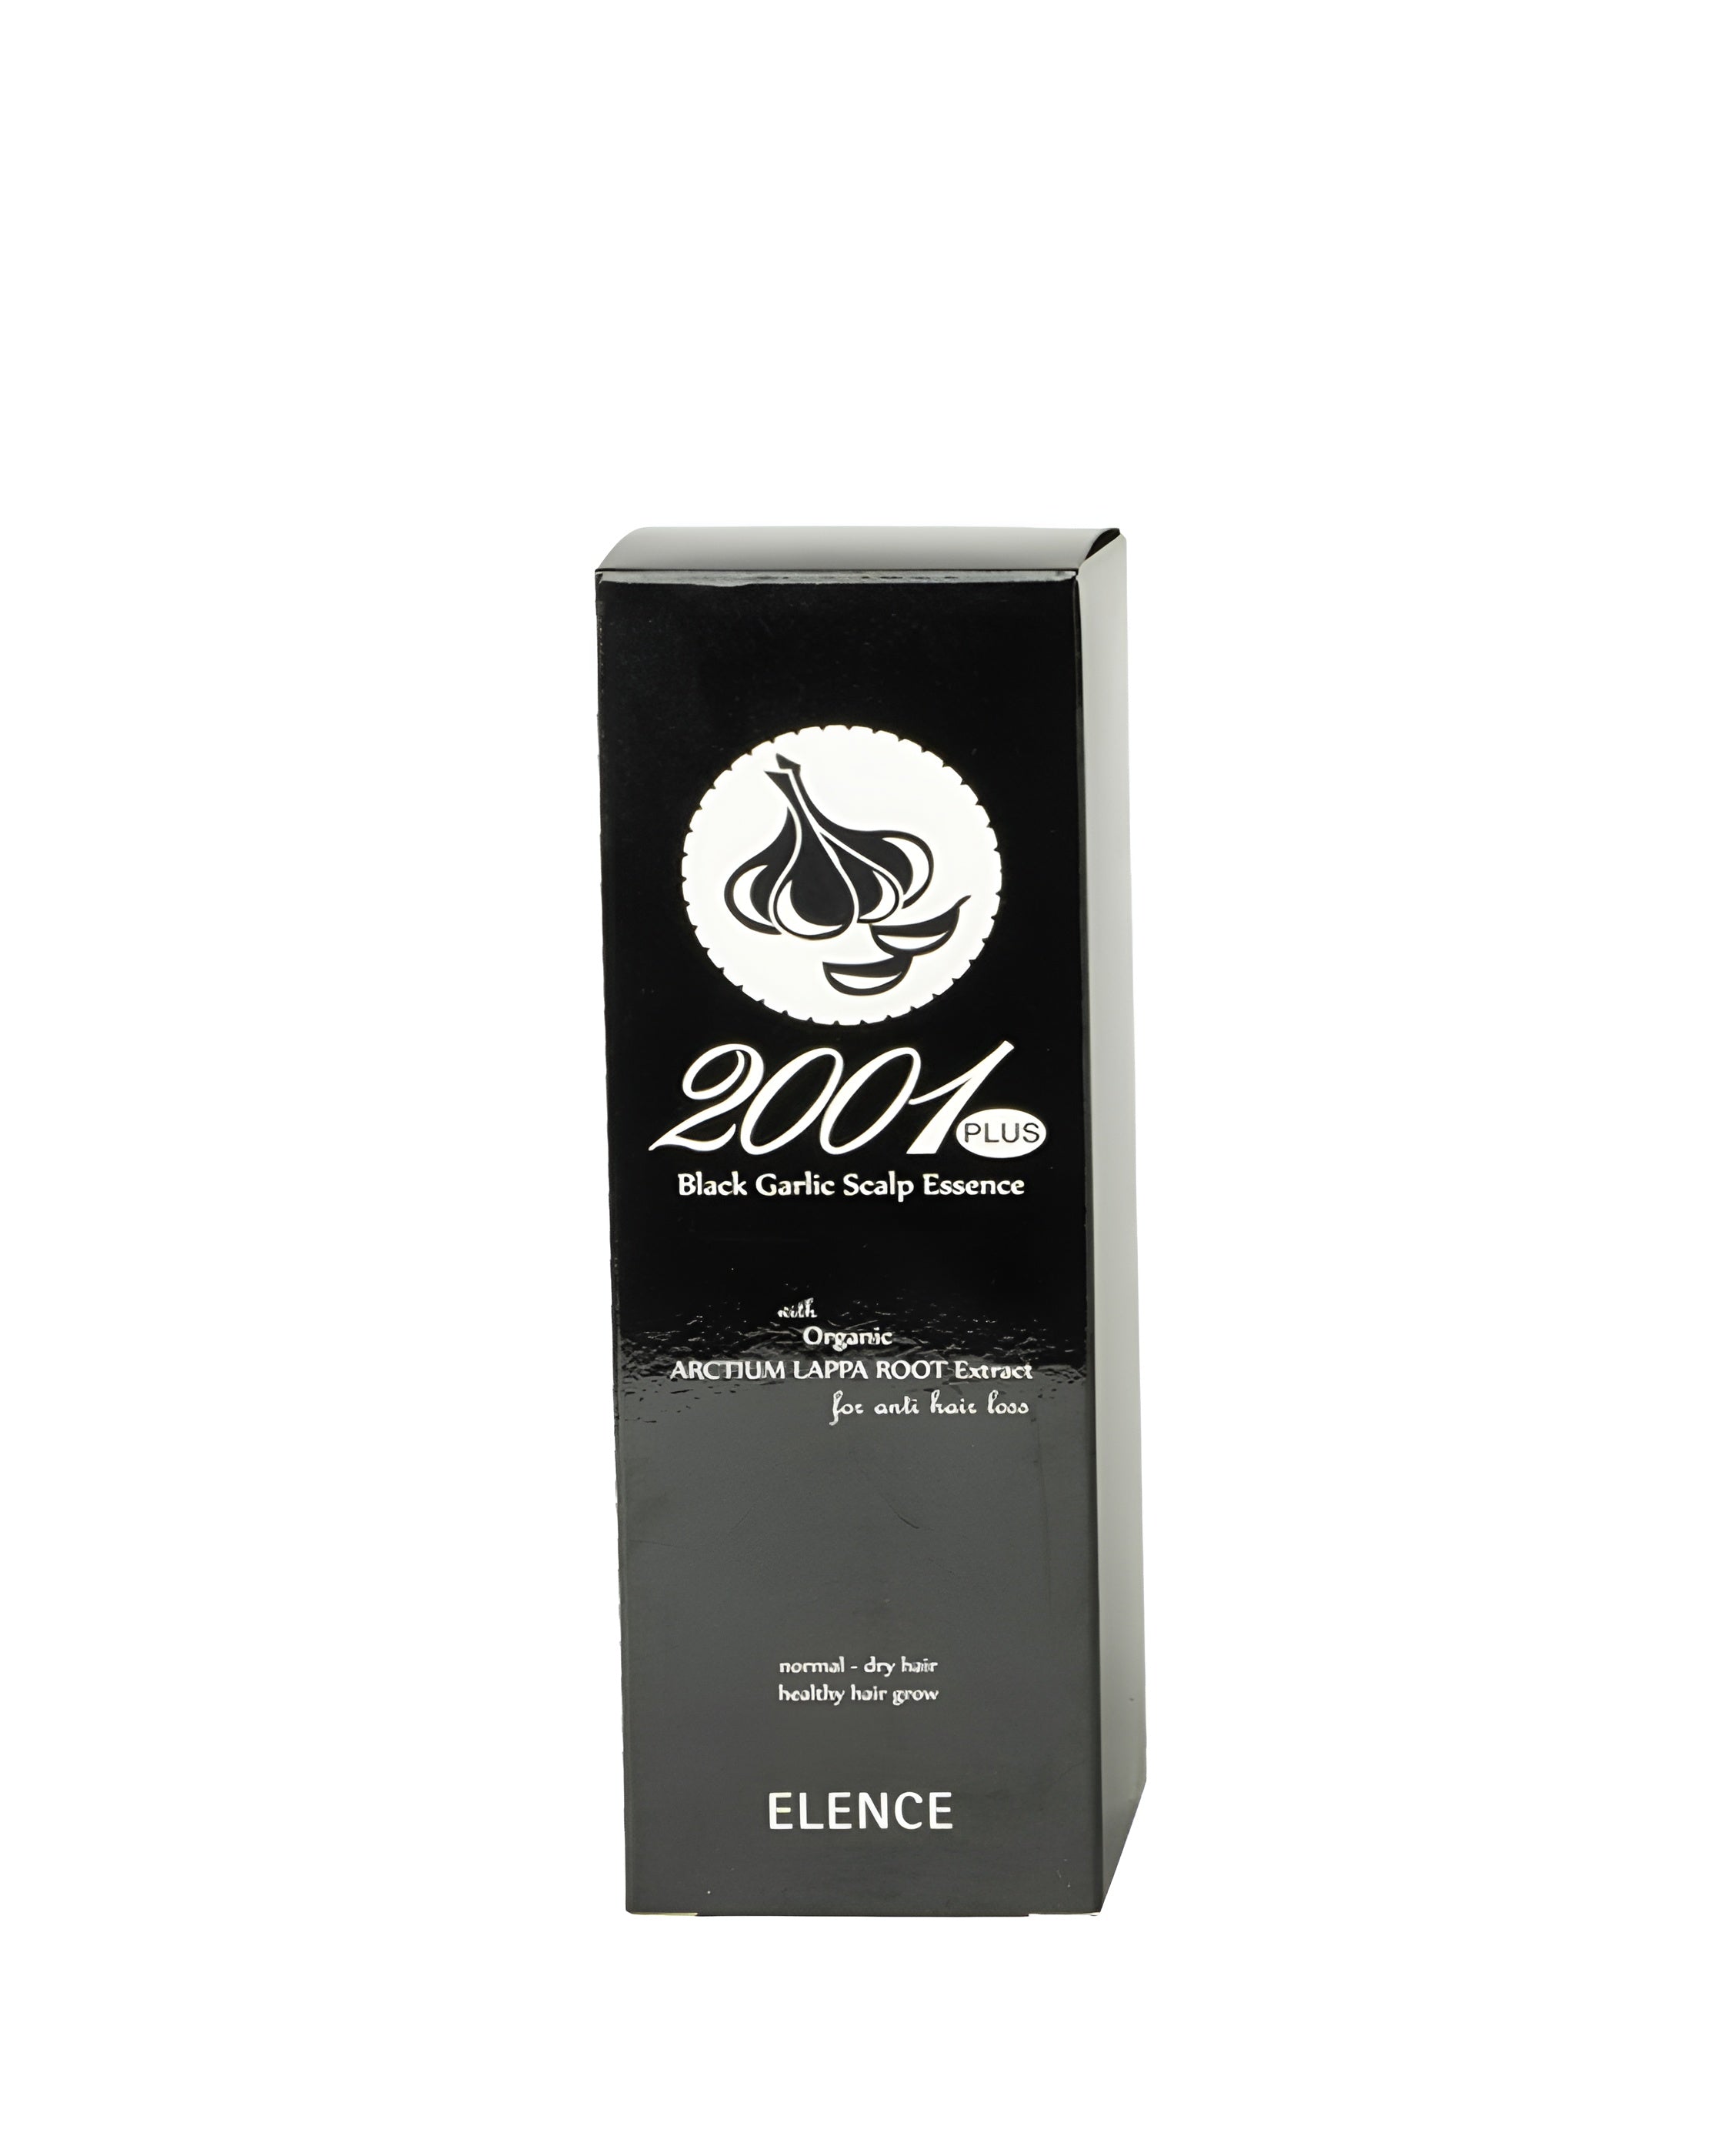 Elence 2001 | Black Garlic Scalp Essence 120ml pack box